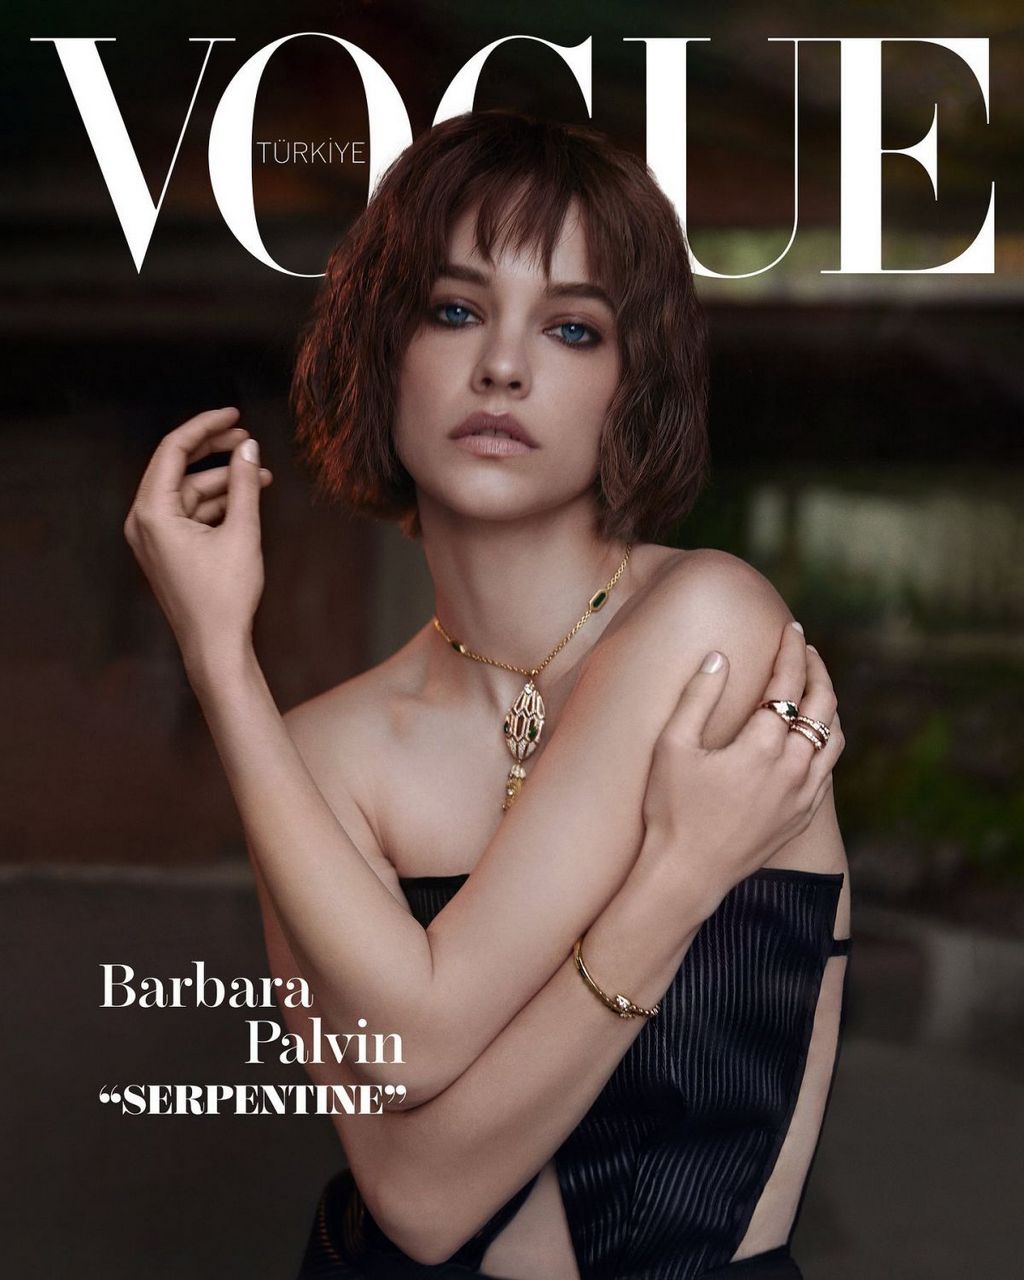 Barbara Palvin Fior Vogue Magazine Turkey April